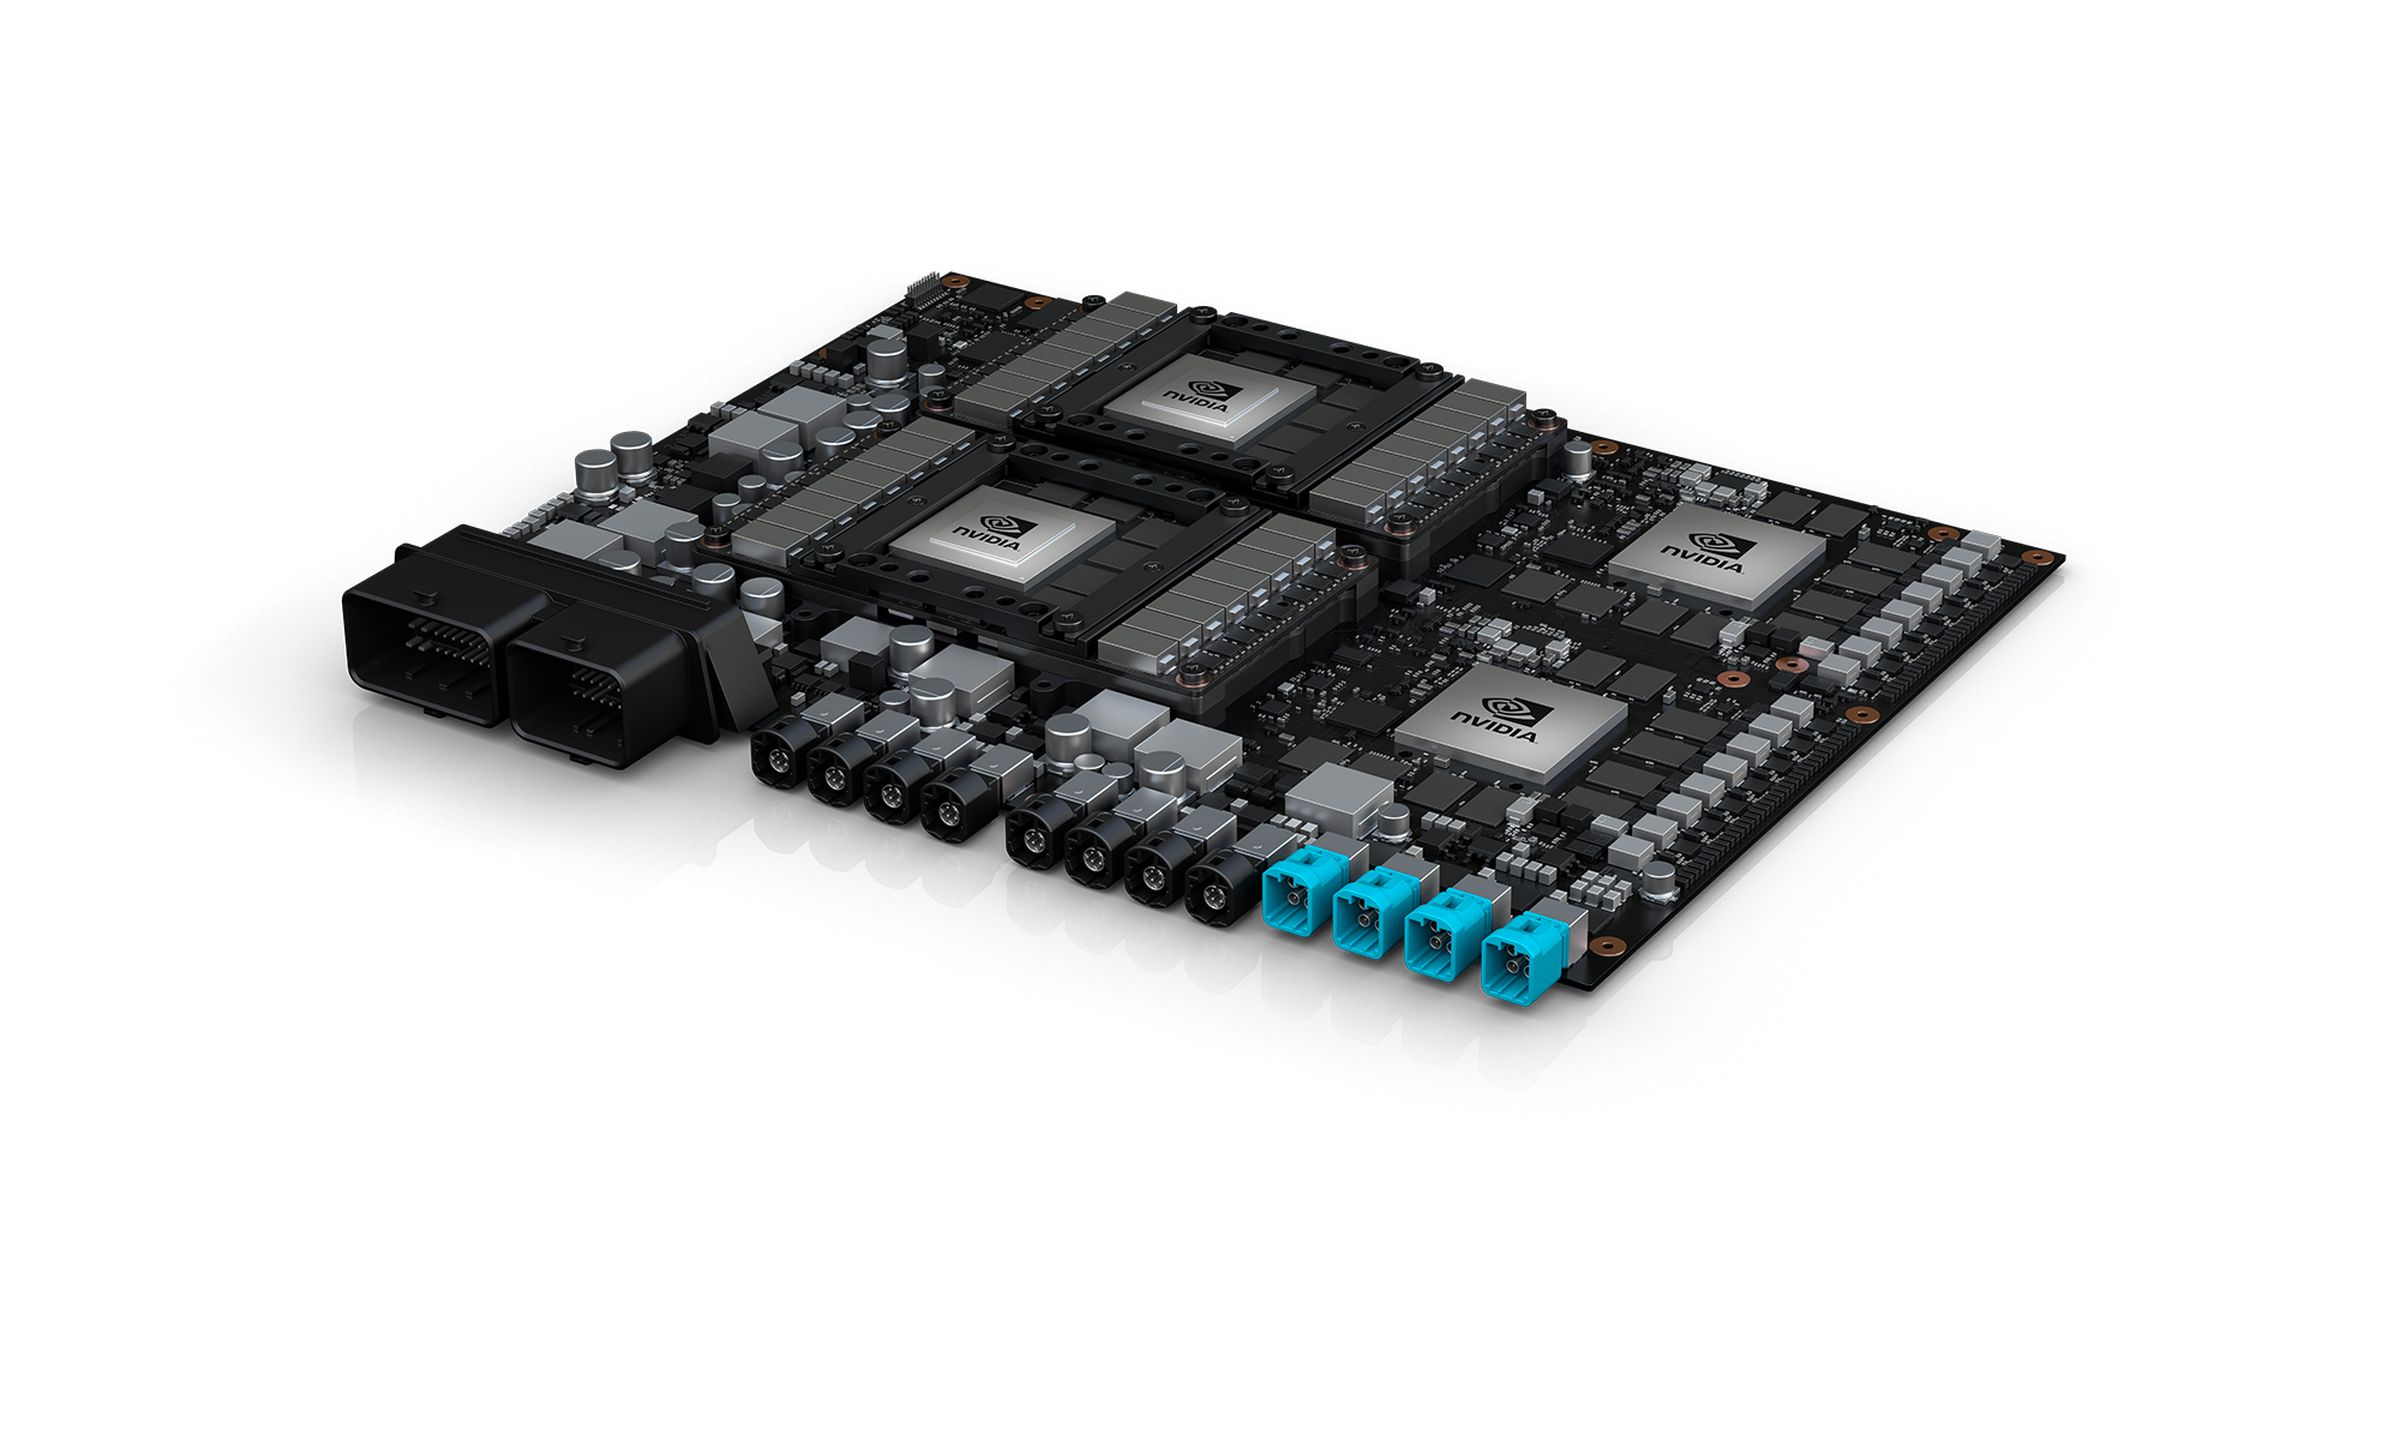 Nvidia’s Drive PX Pegasus computing platform